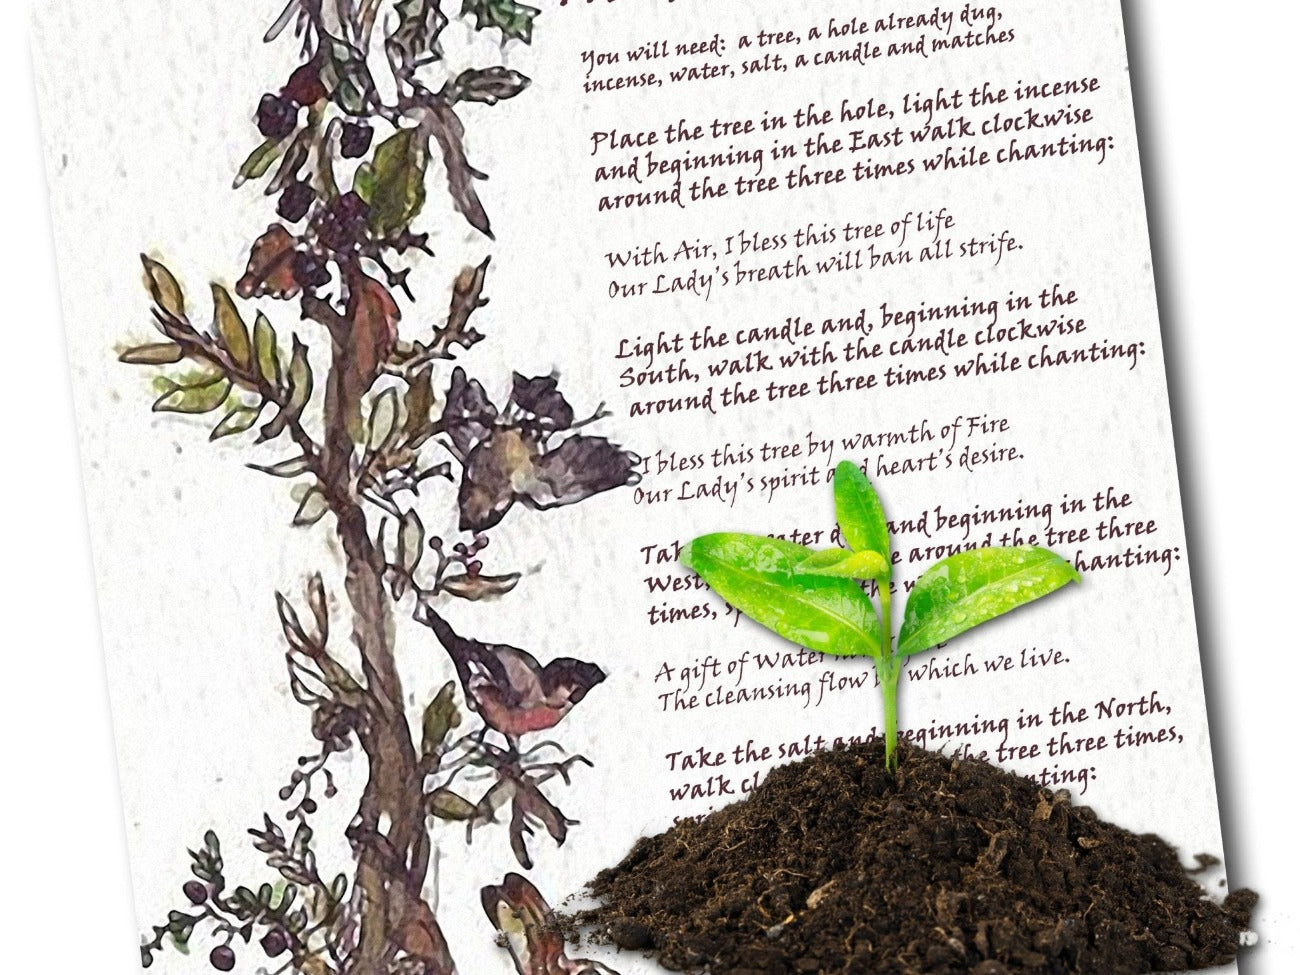 TREE PLANTING RITUAL Printable Page - Morgana Magick Spell